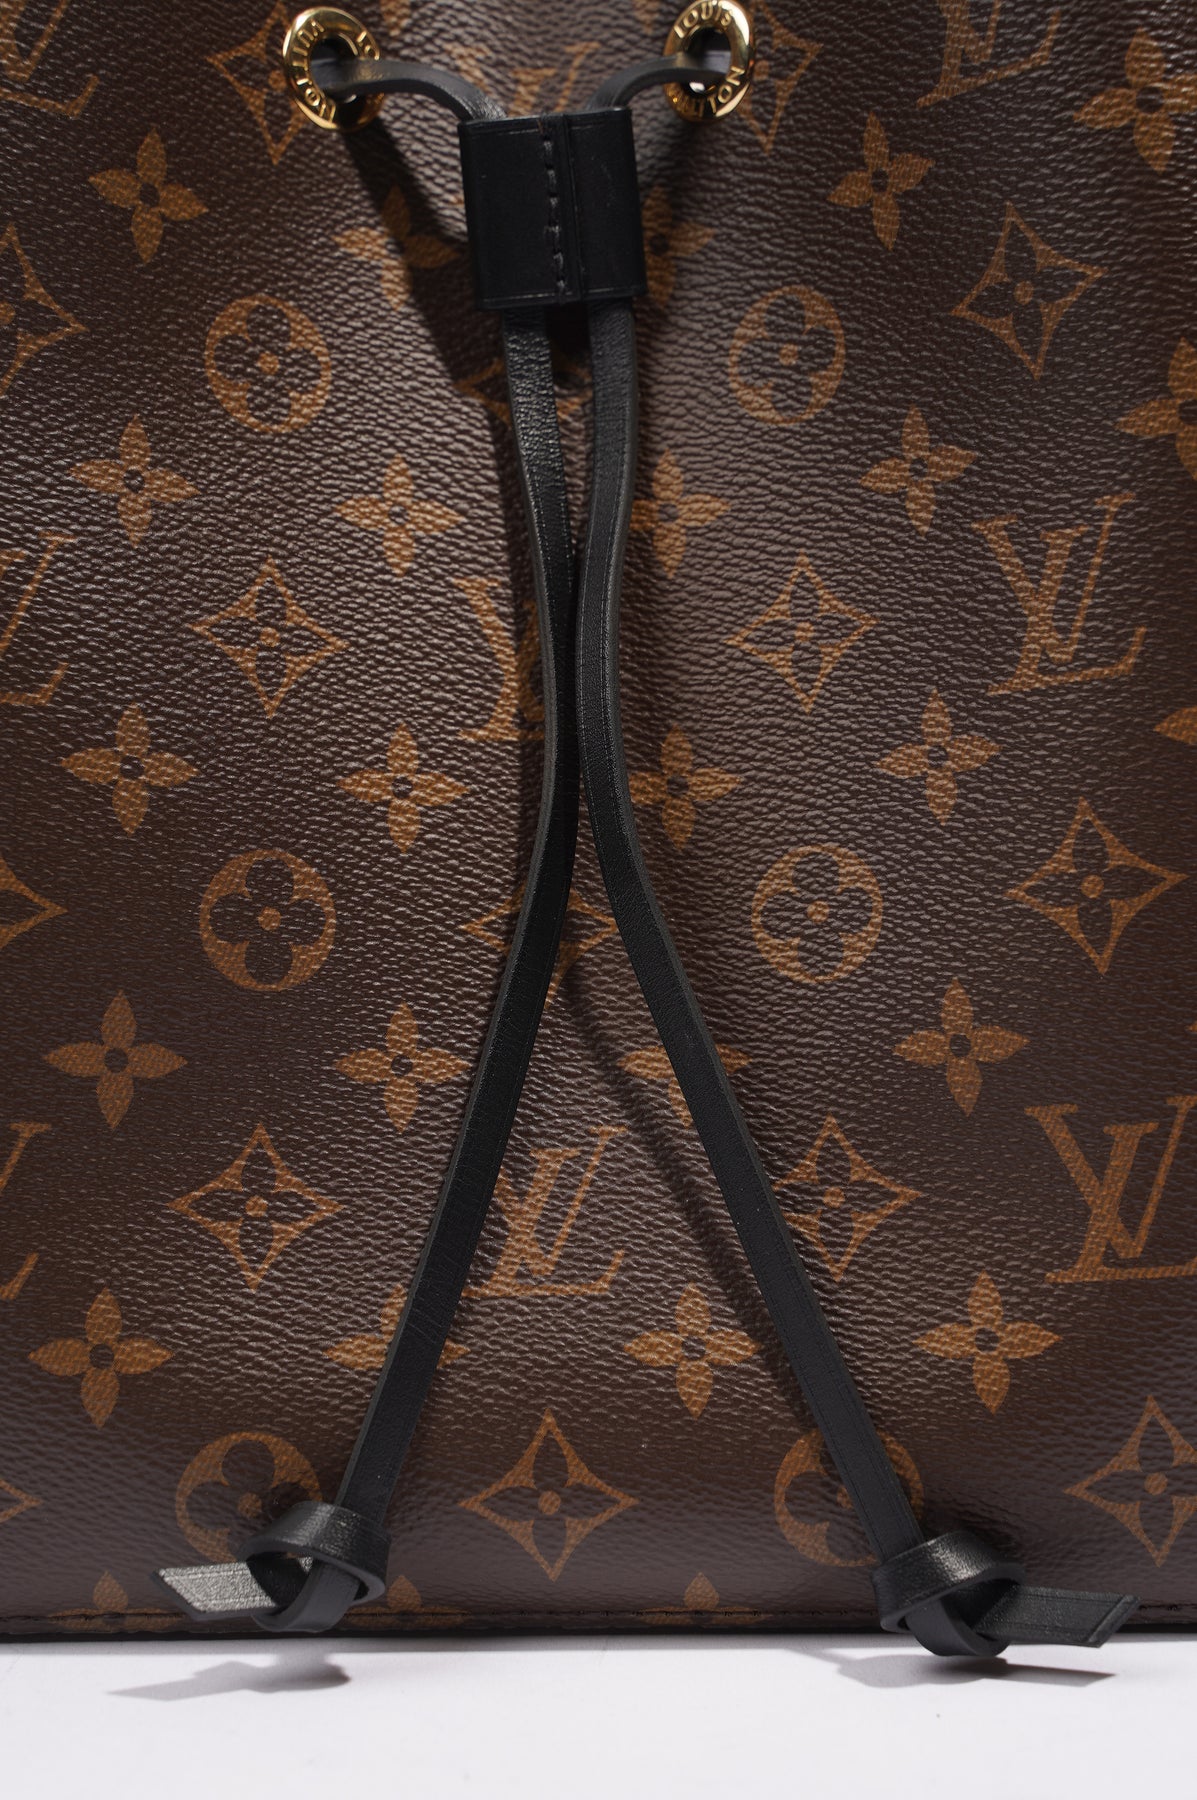 Louis Vuitton Noe GM Tasche reinigen, Tutorial